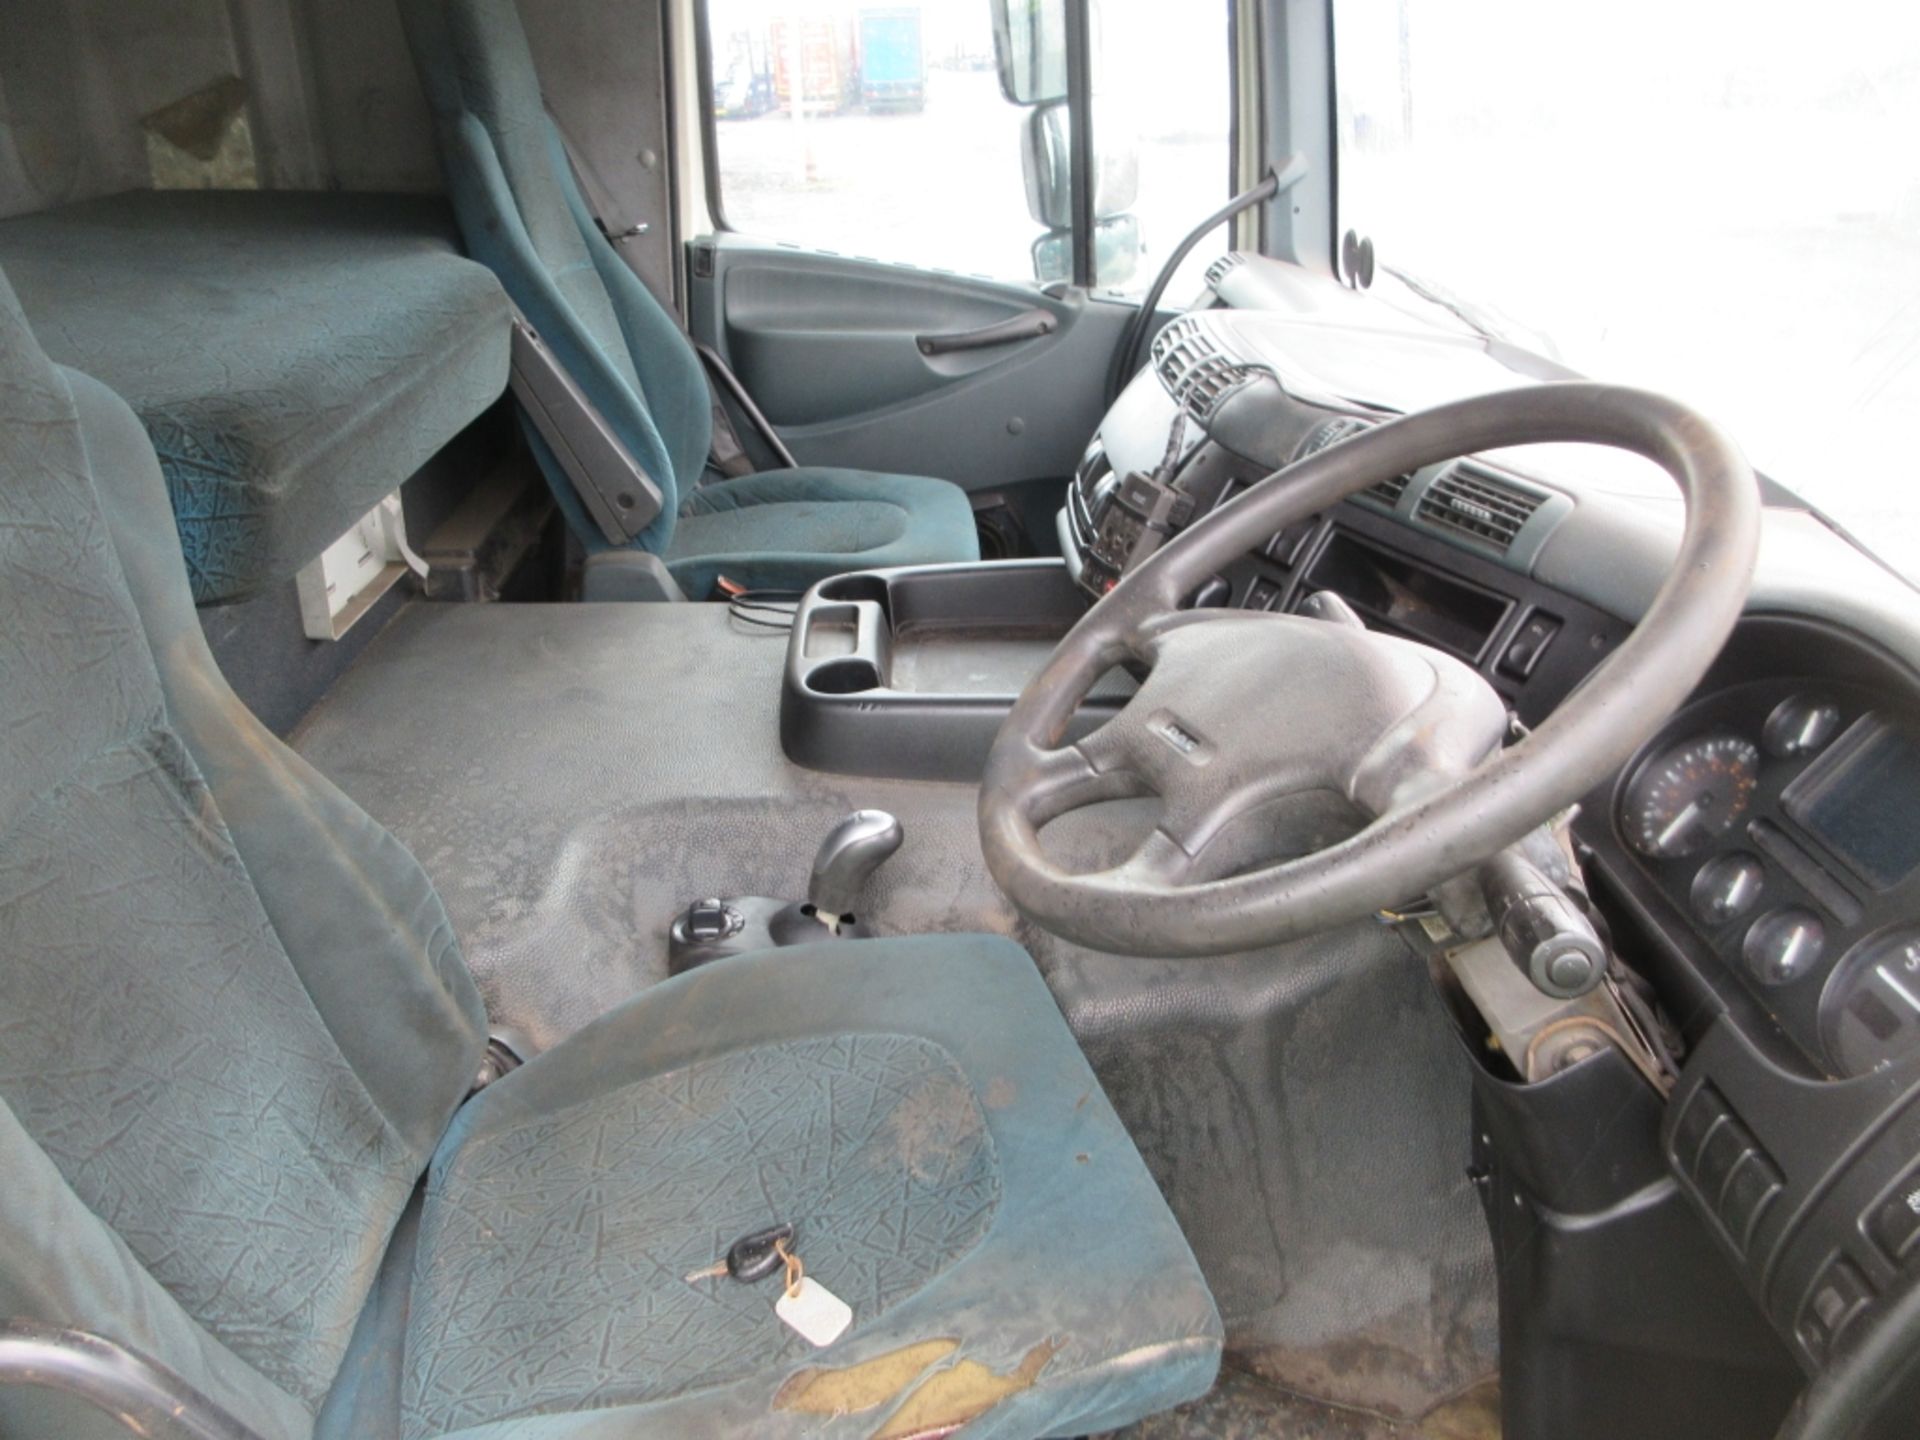 DAF TRUCKS FT CF 85.380 - 12580cc Space Cab Diesel Automatic - VIN: XLRTE85C0E694315 - Year: - Image 6 of 6